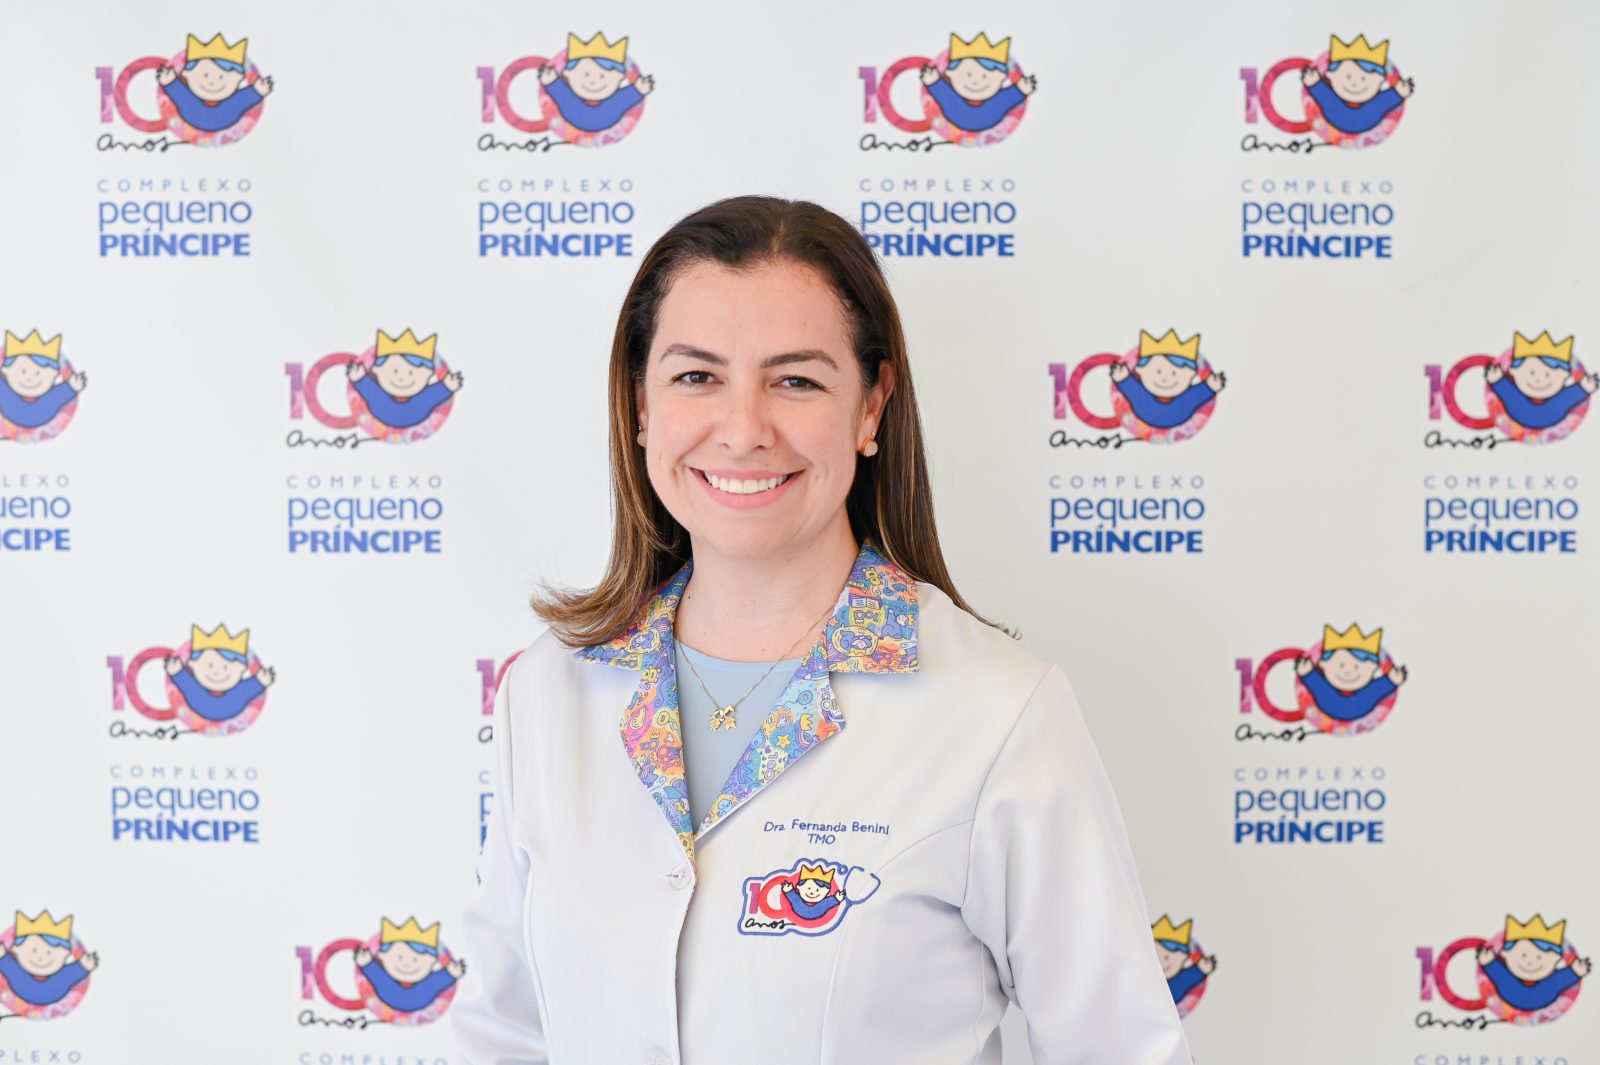 Dra. Fernanda Moreira de Lara Benini